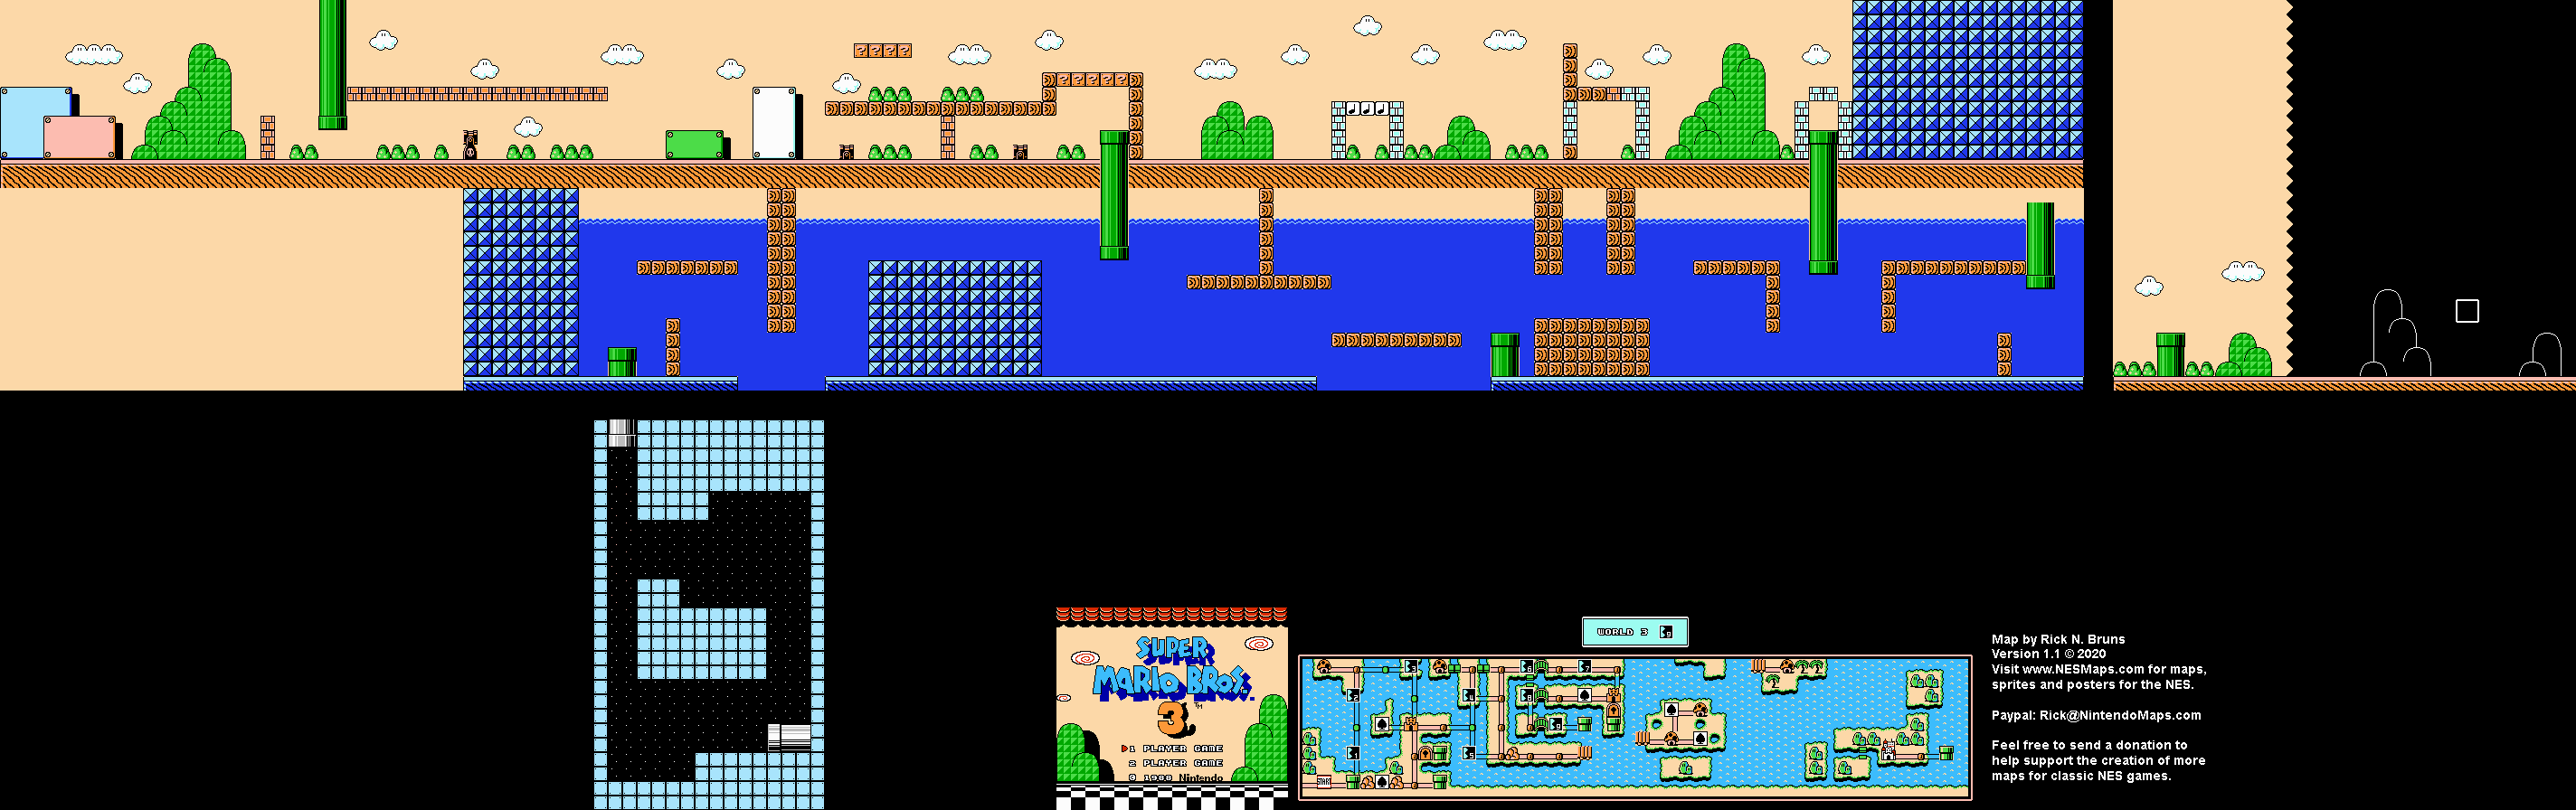 Super Mario Brothers 3 - World 3-9 Nintendo NES Map BG